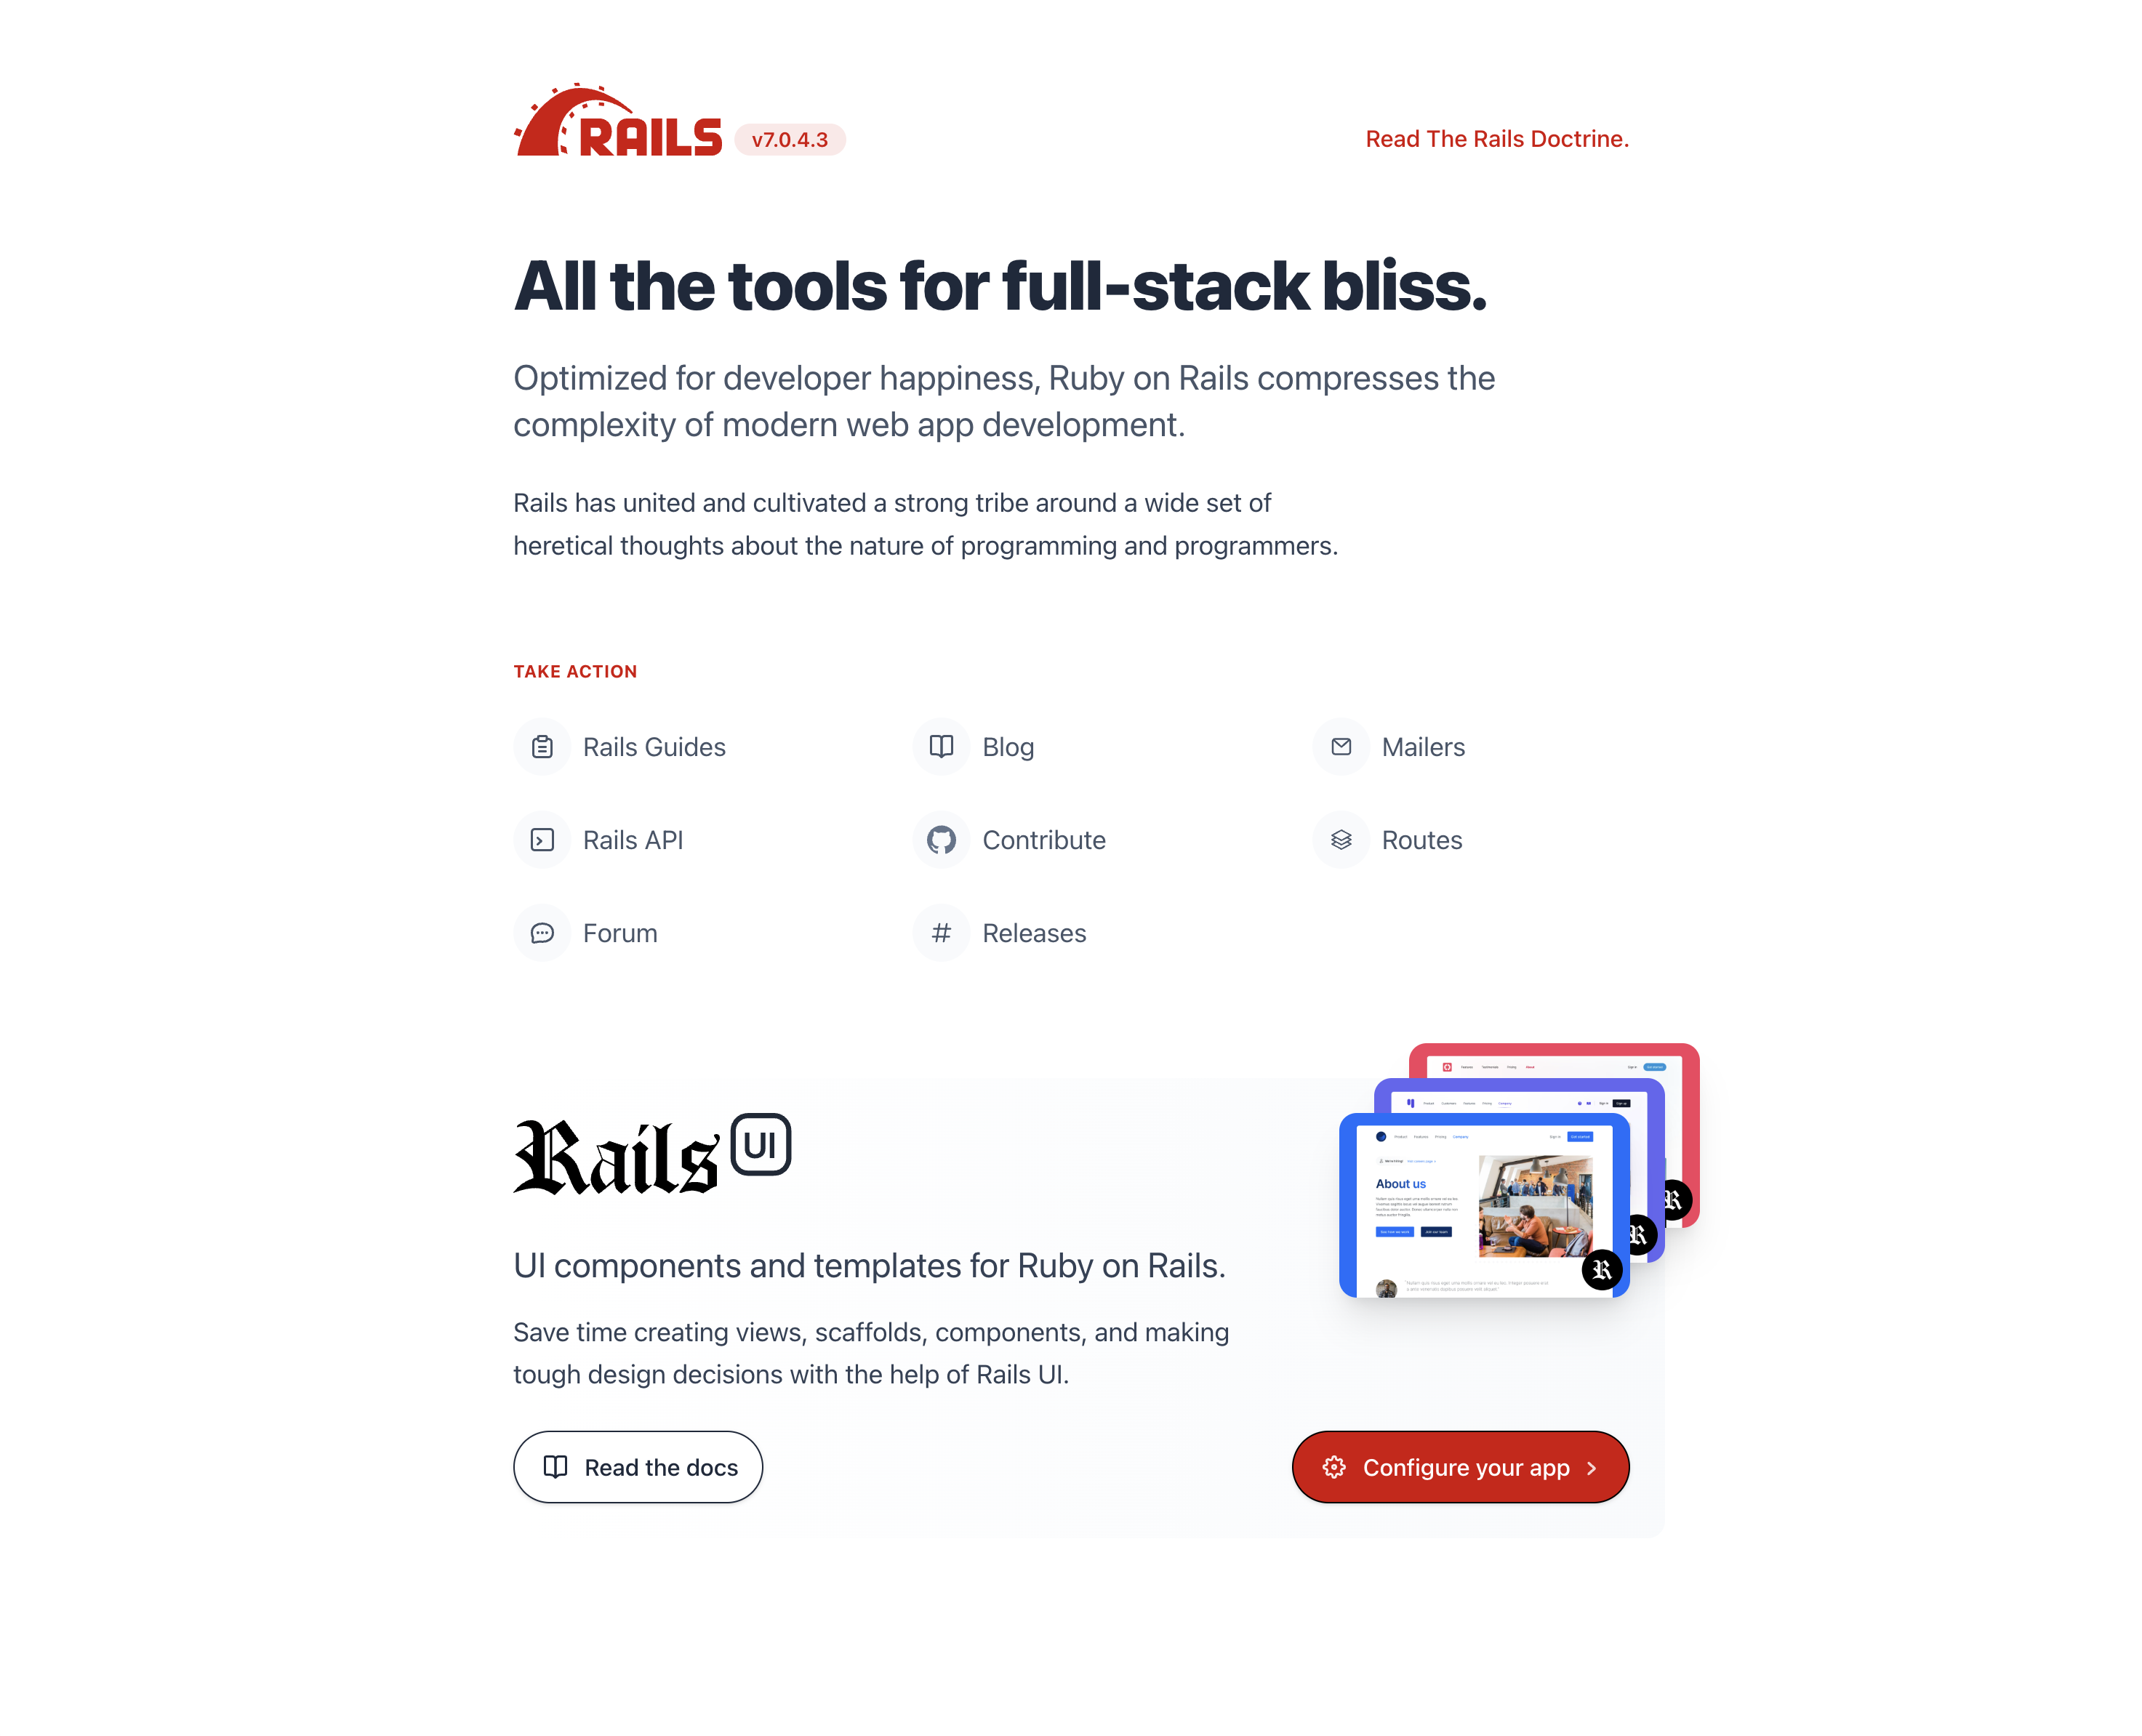 Rails UI start page